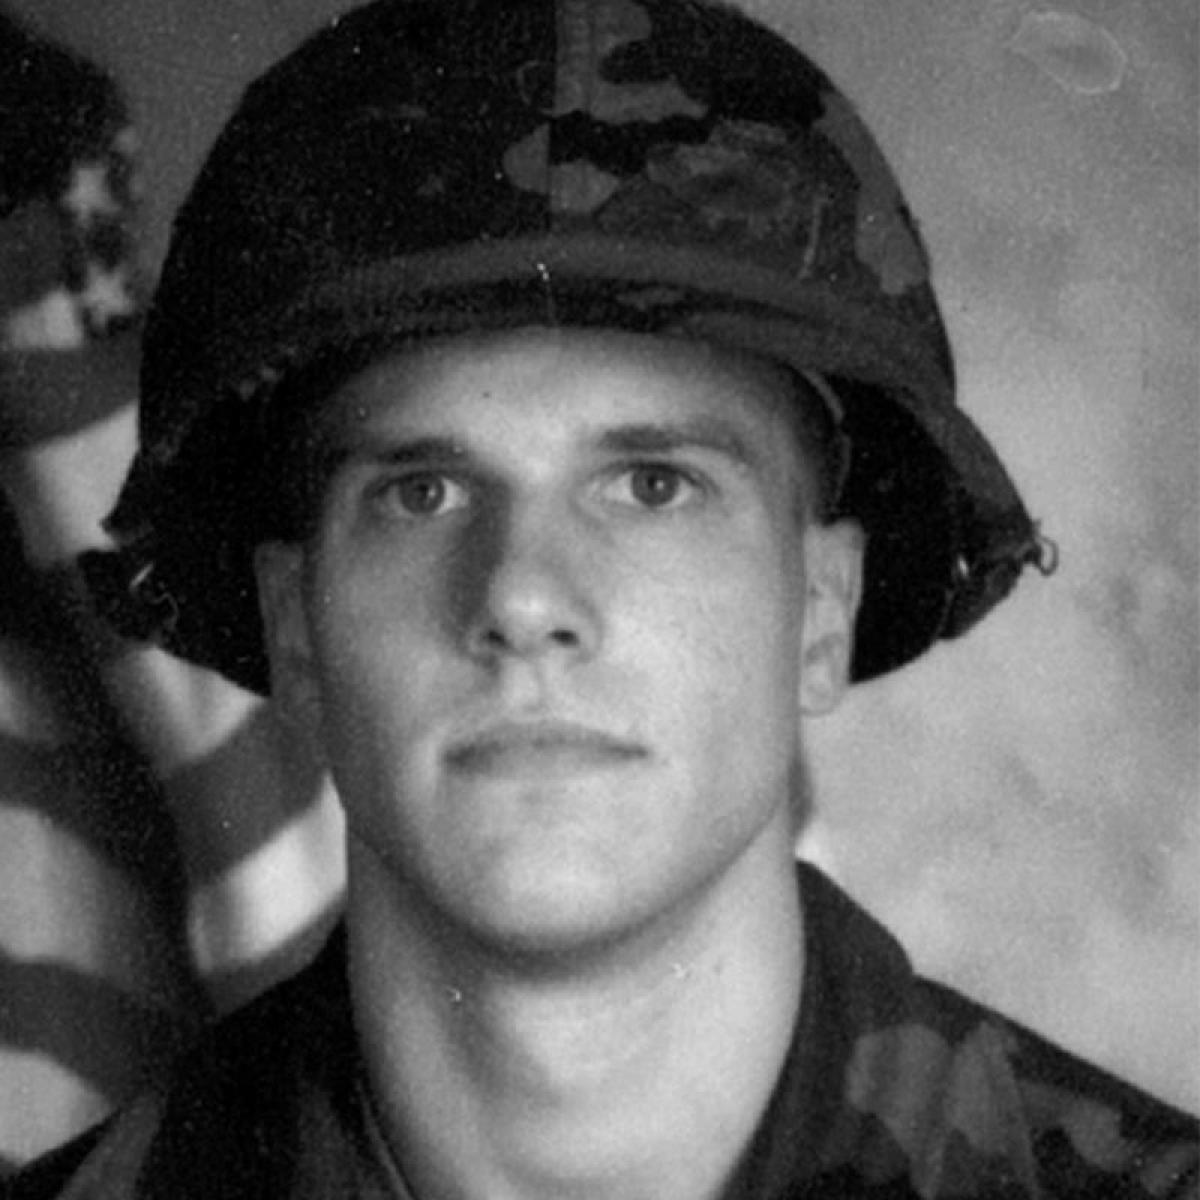 Peter Sorenson US Army 1985-1991